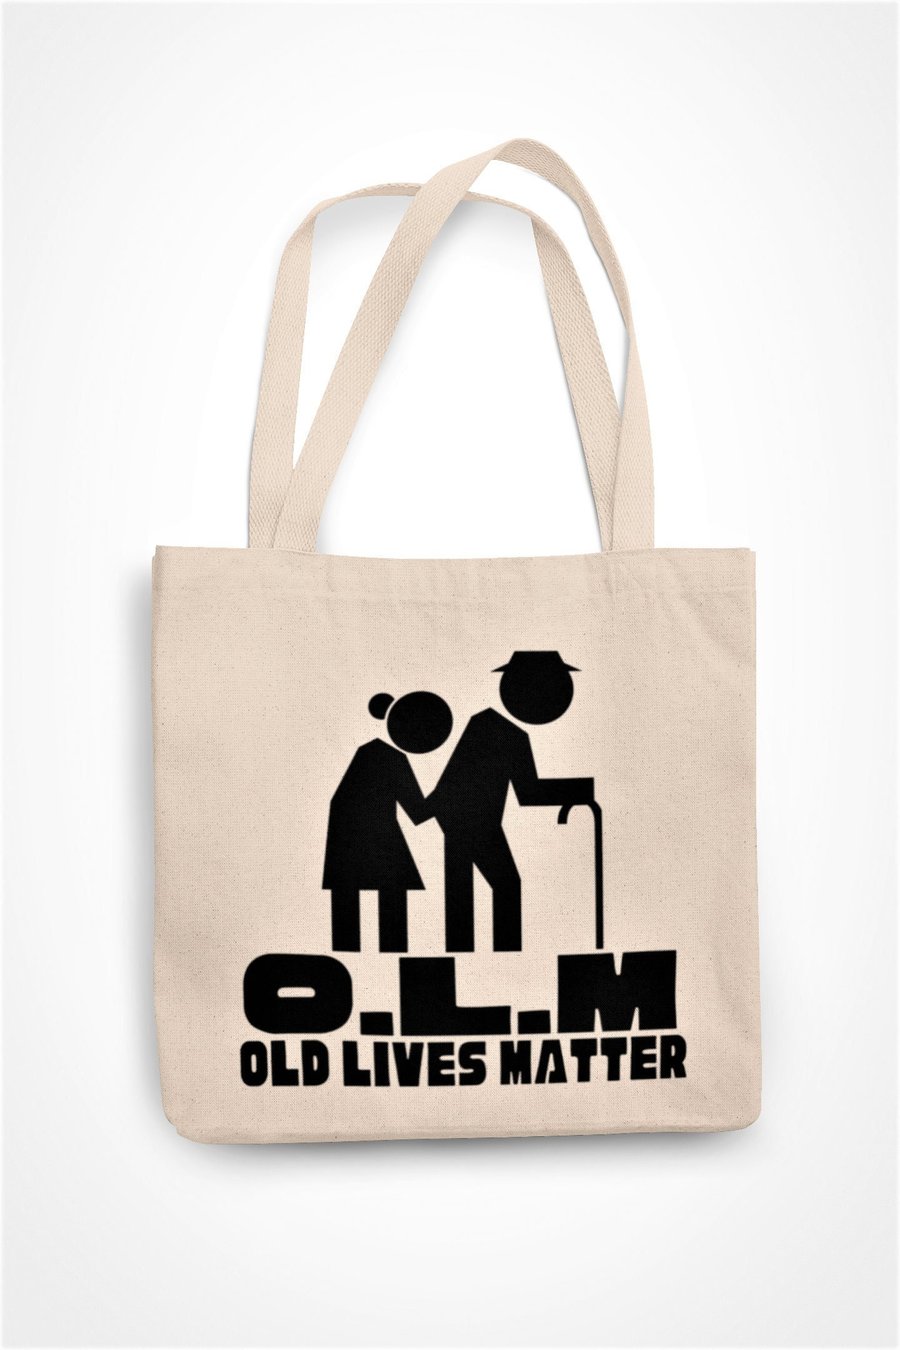 O.L.M Old Lives Matter Tote Bag Funny Novelty Eco Friendly Shopping Bag